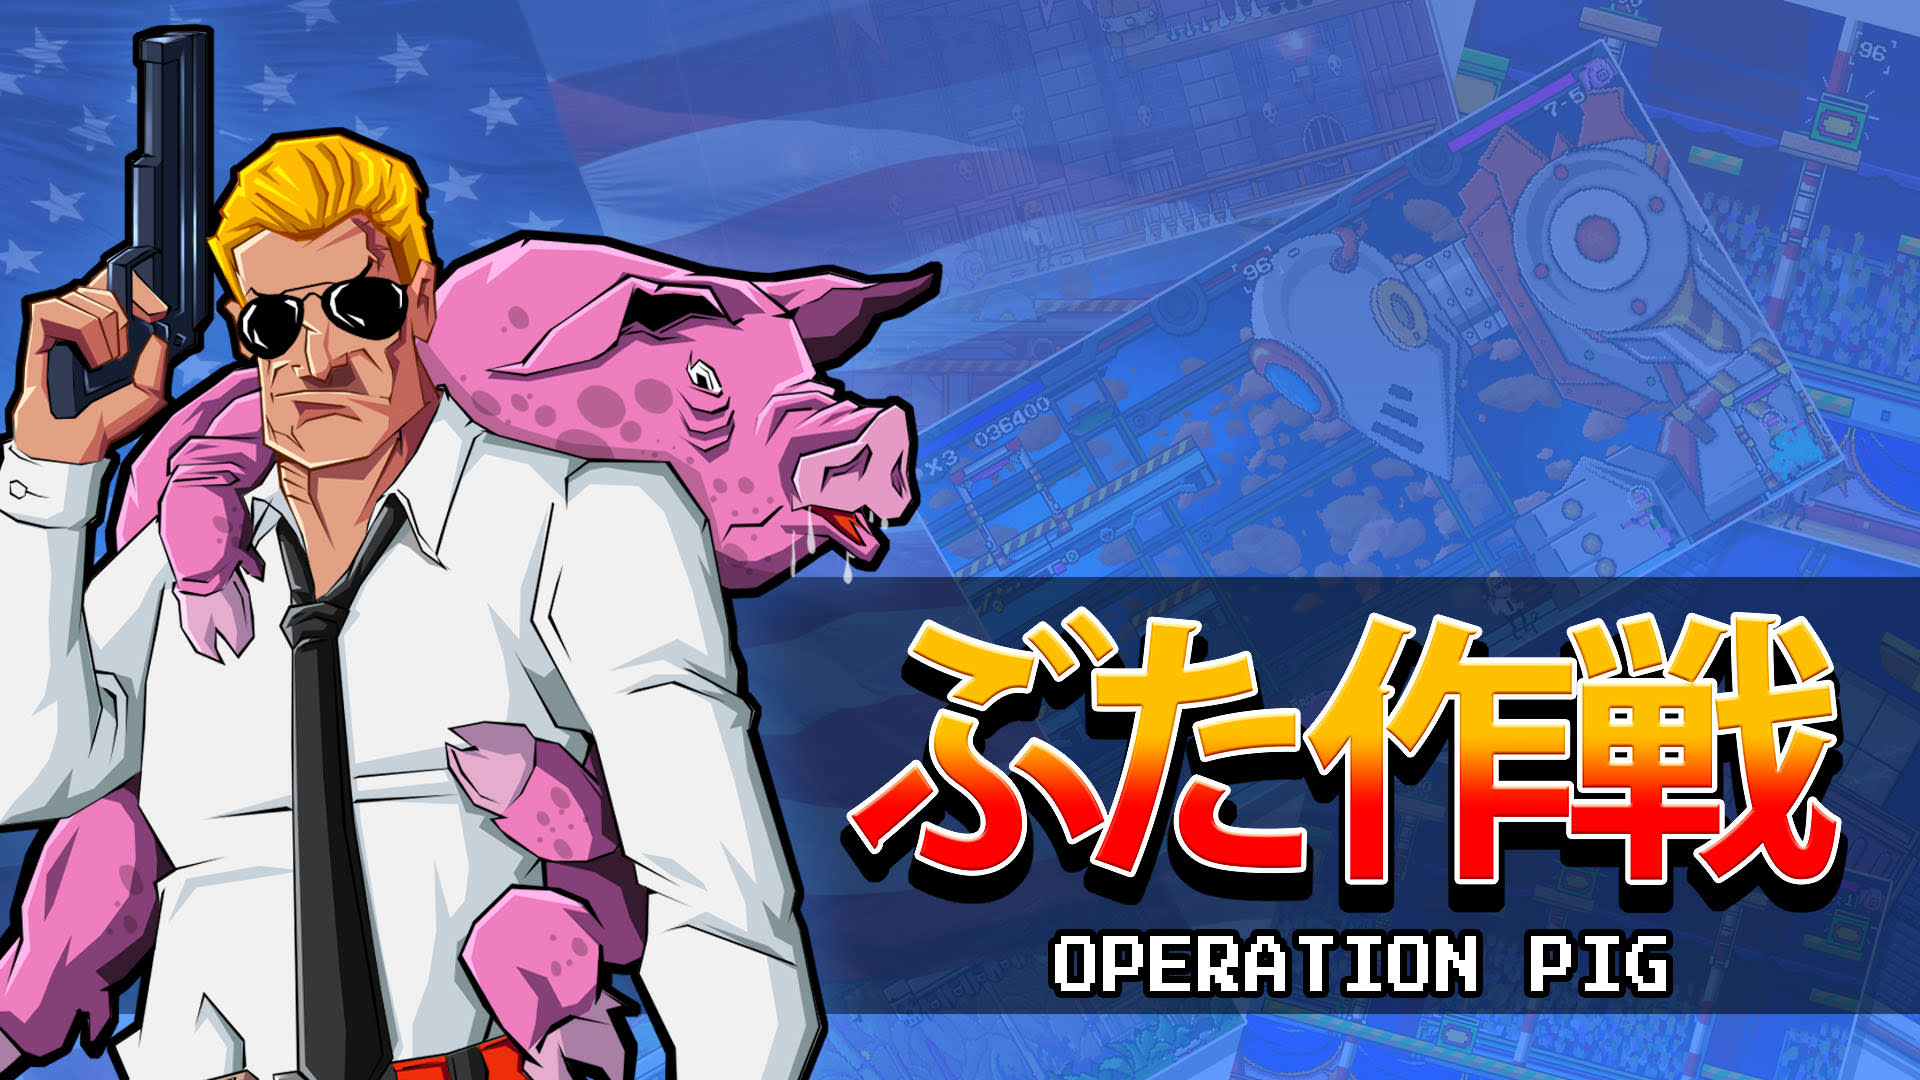 Operation Pig